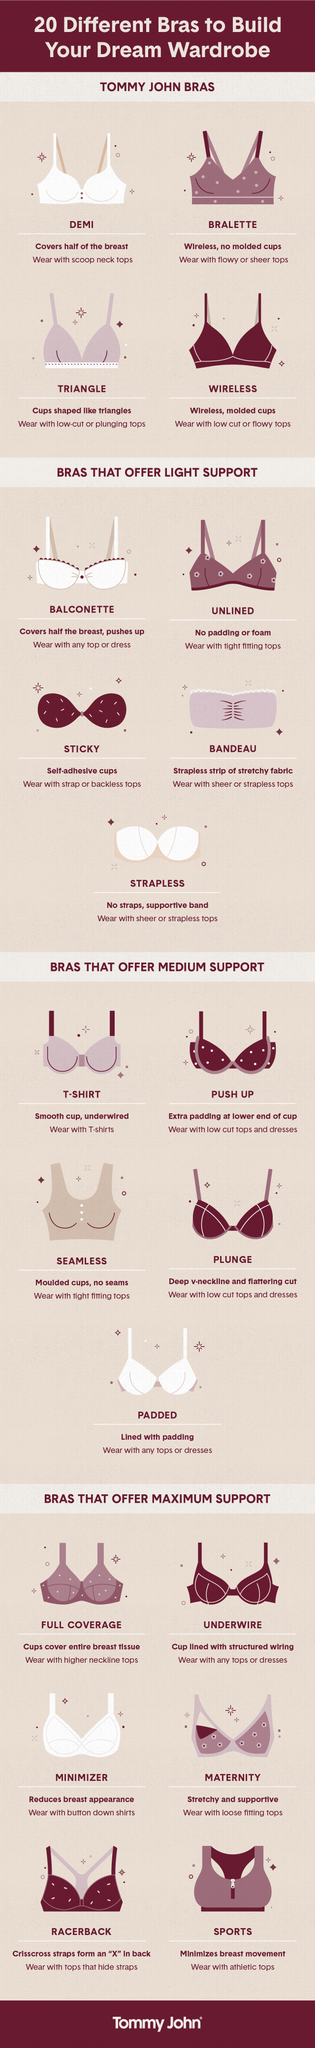 20 Types of Bras